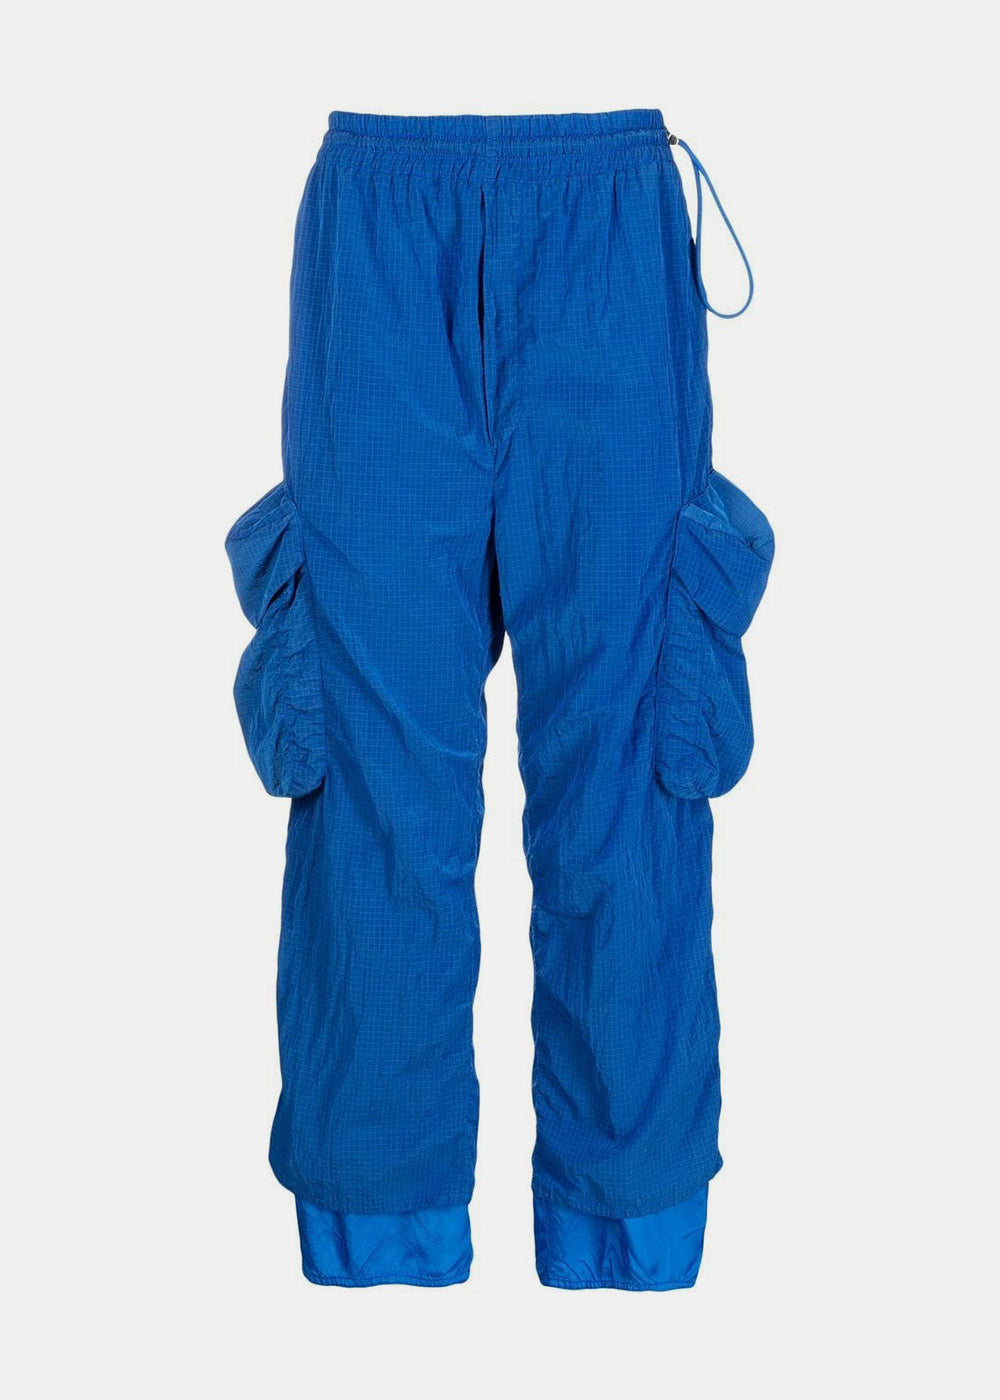 Sunnei Blue Elastic Pants - NOBLEMARS